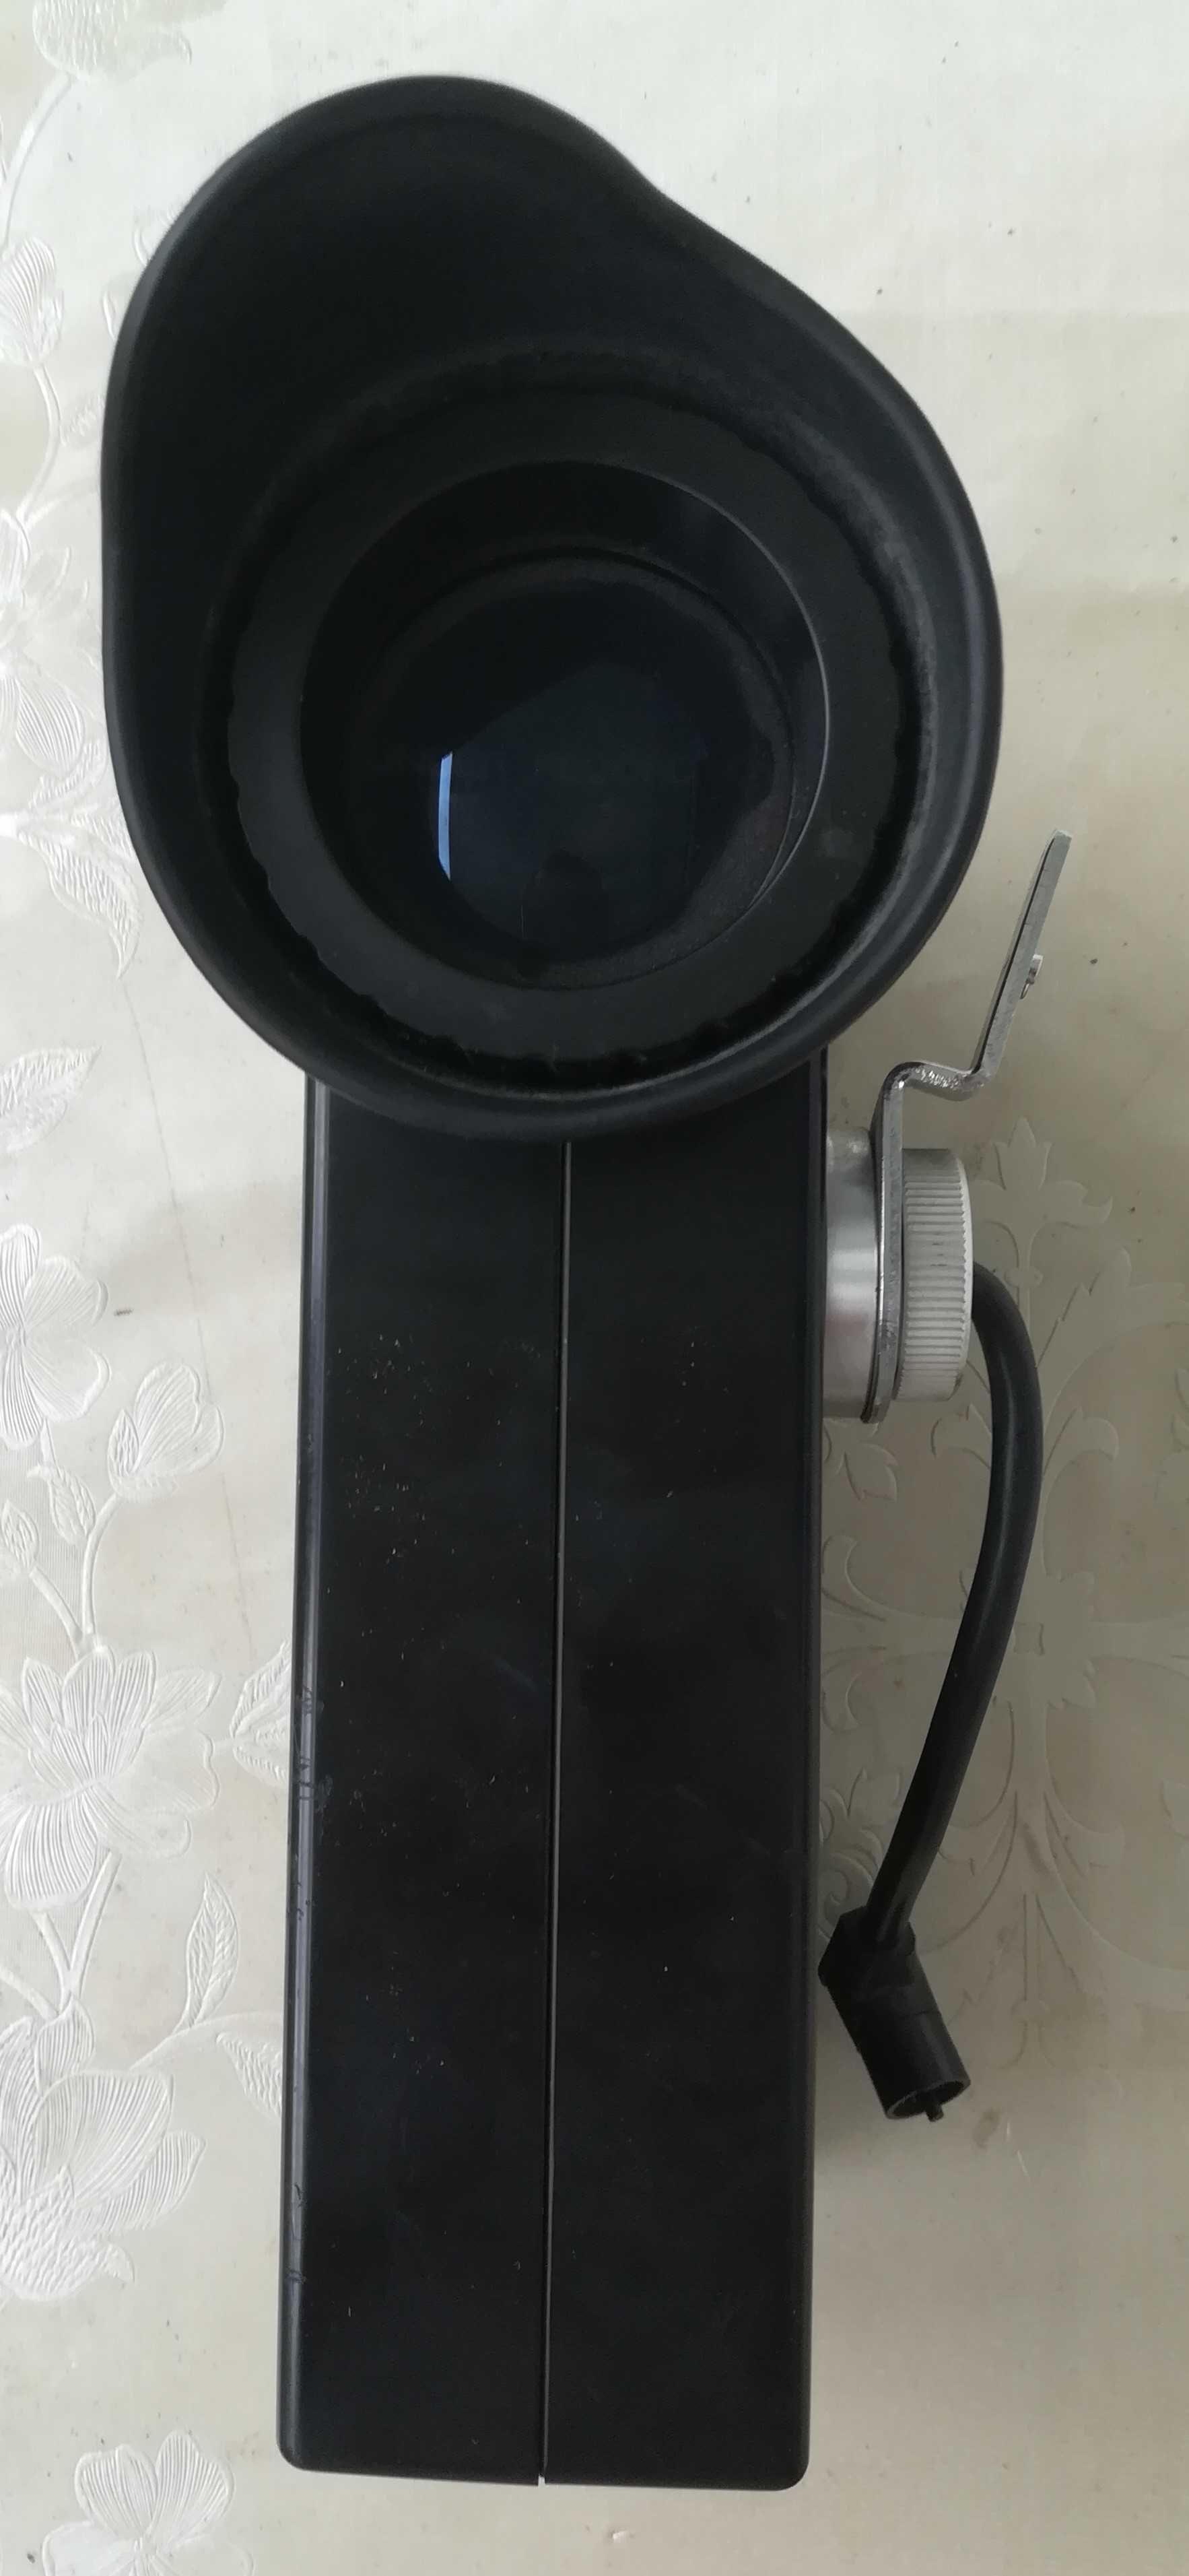 Camera video SABA CVC-68 (VINTAGE, Germania 1978)